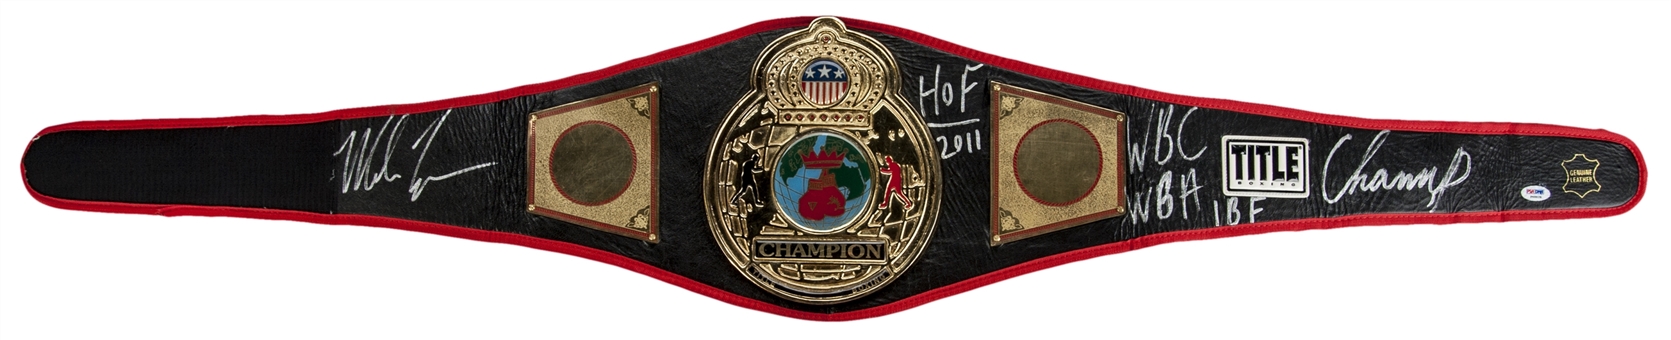 Mike Tyson Signed & Inscribed Boxing Belt (PSA/DNA)